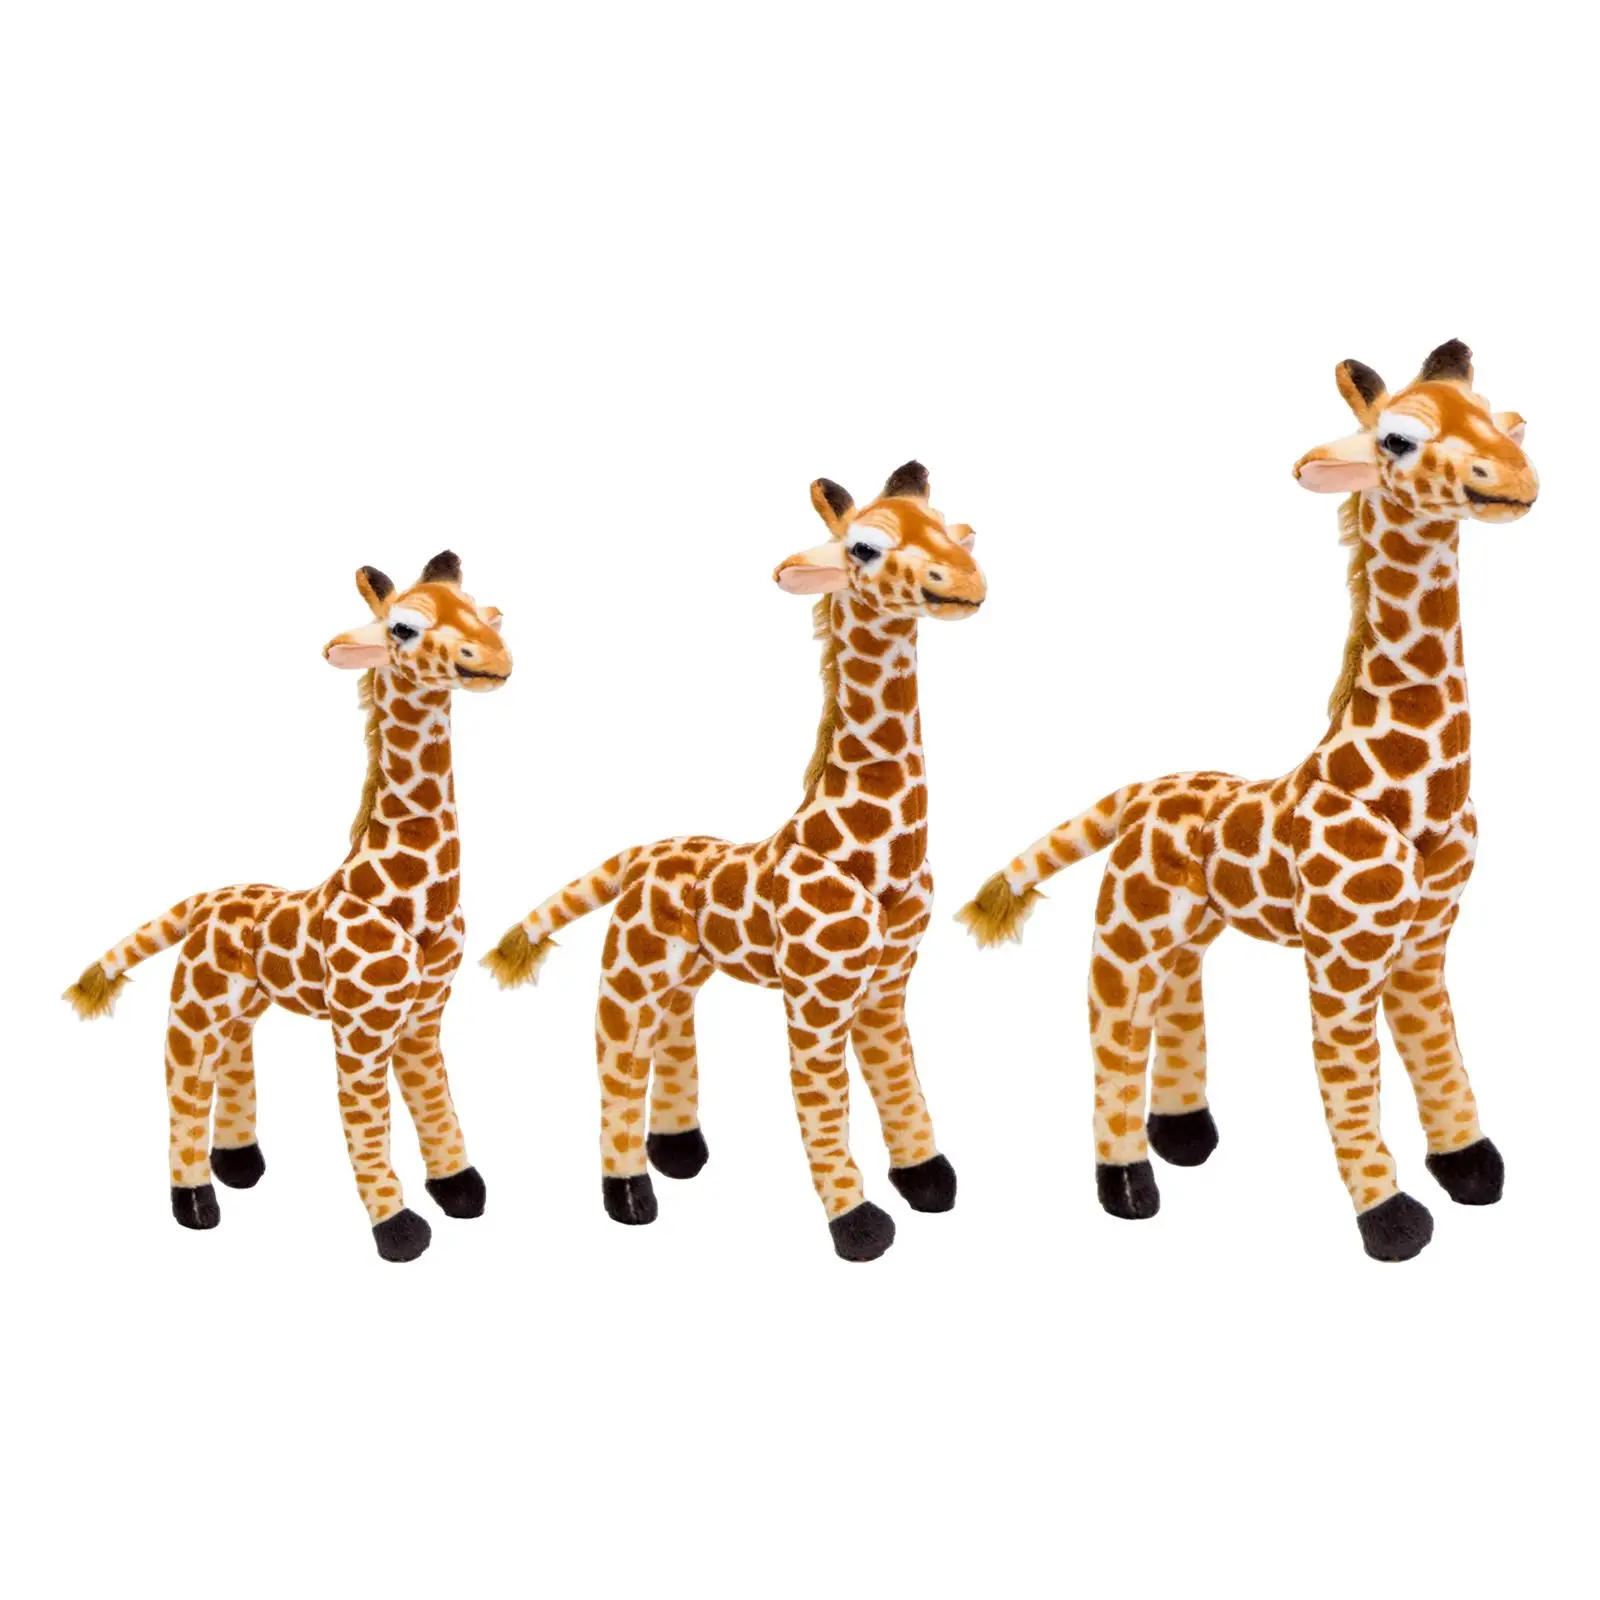 Plush Giraffe Decor Stuffed Animals for Room Anniversary